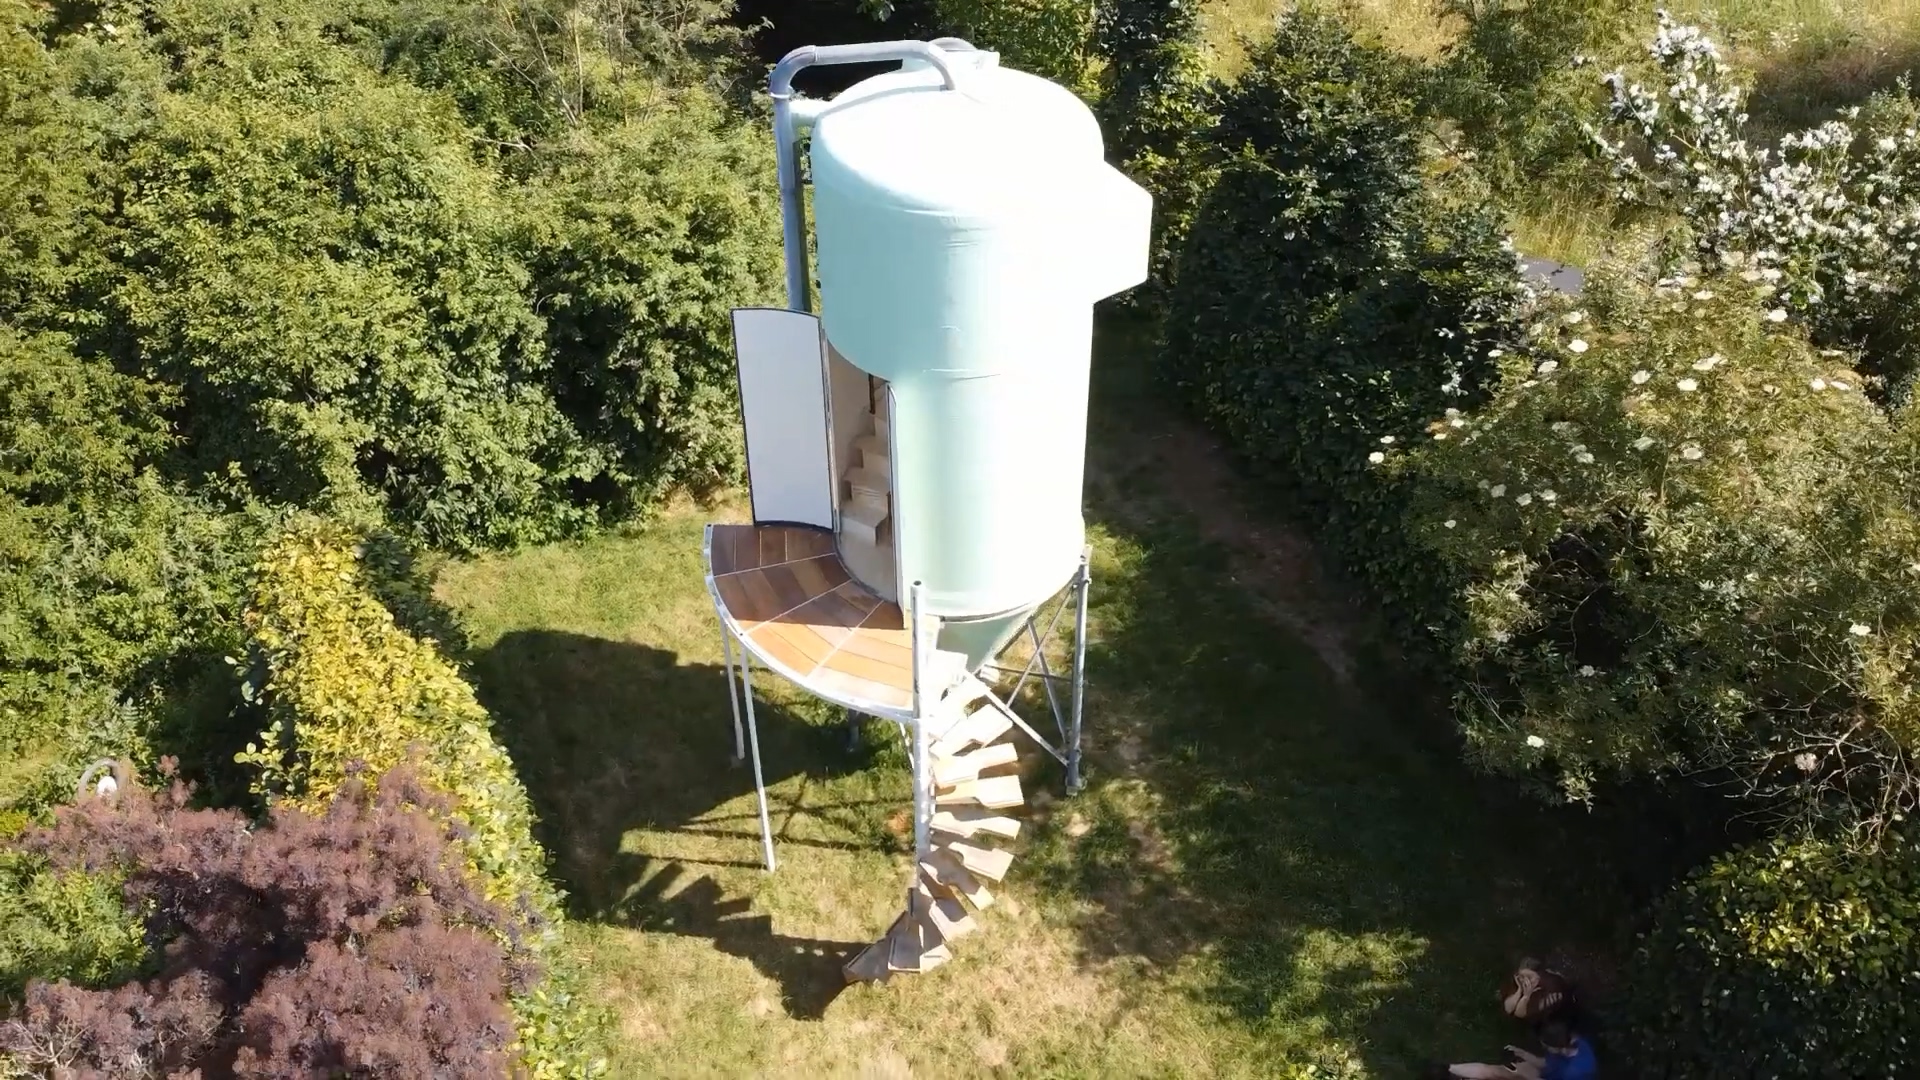 Stella van Beers converts grain silo into micro home